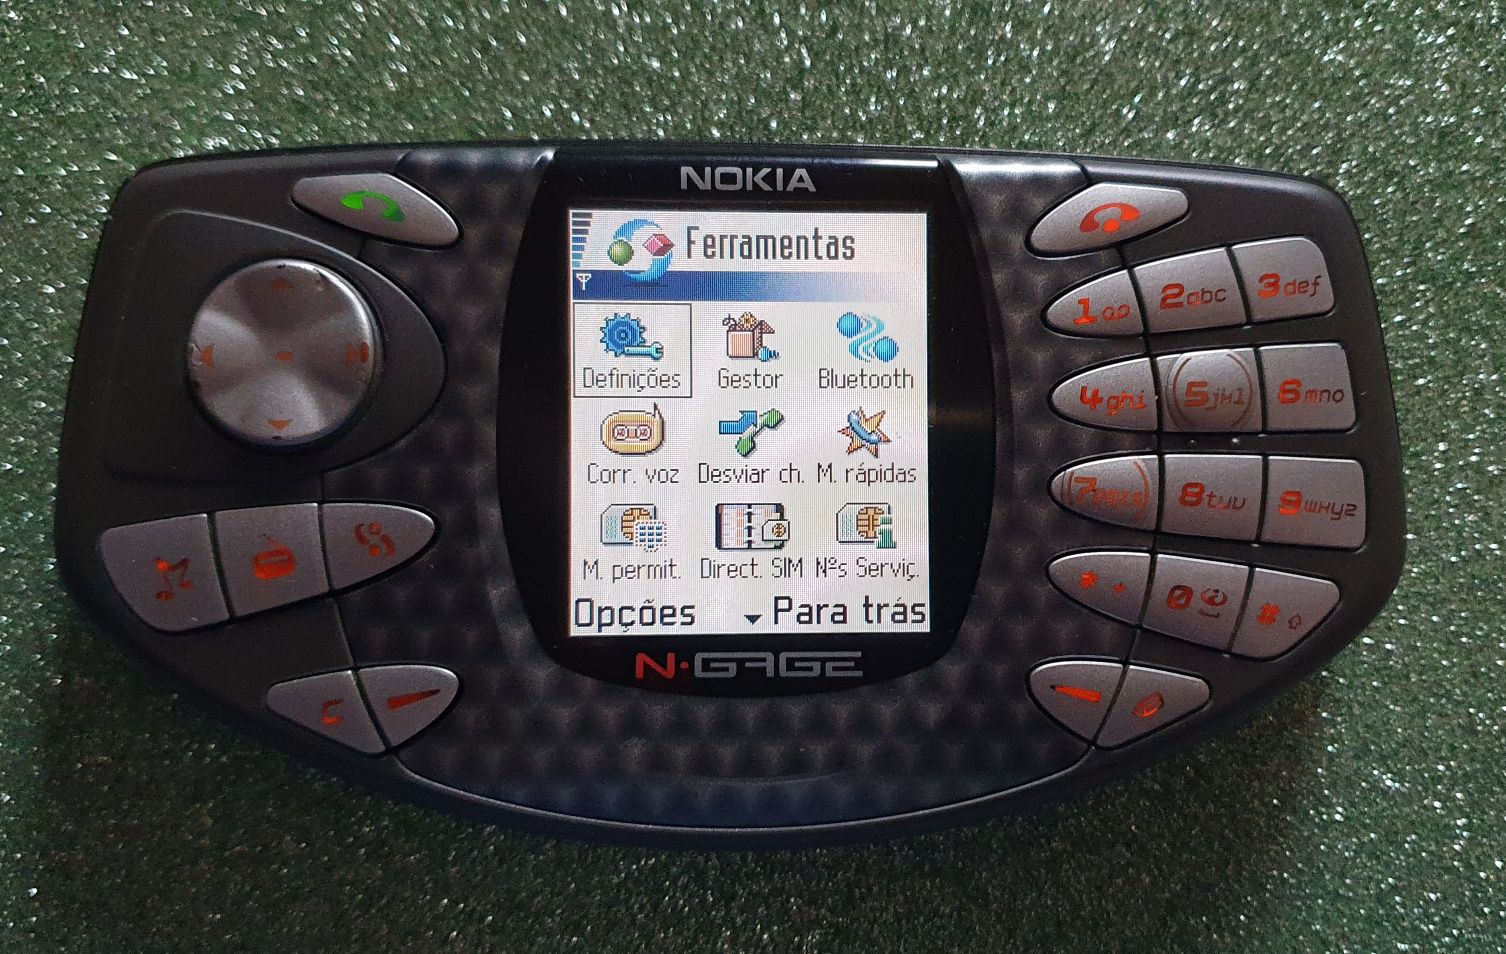 Nokia N-Gage Desbloqueado